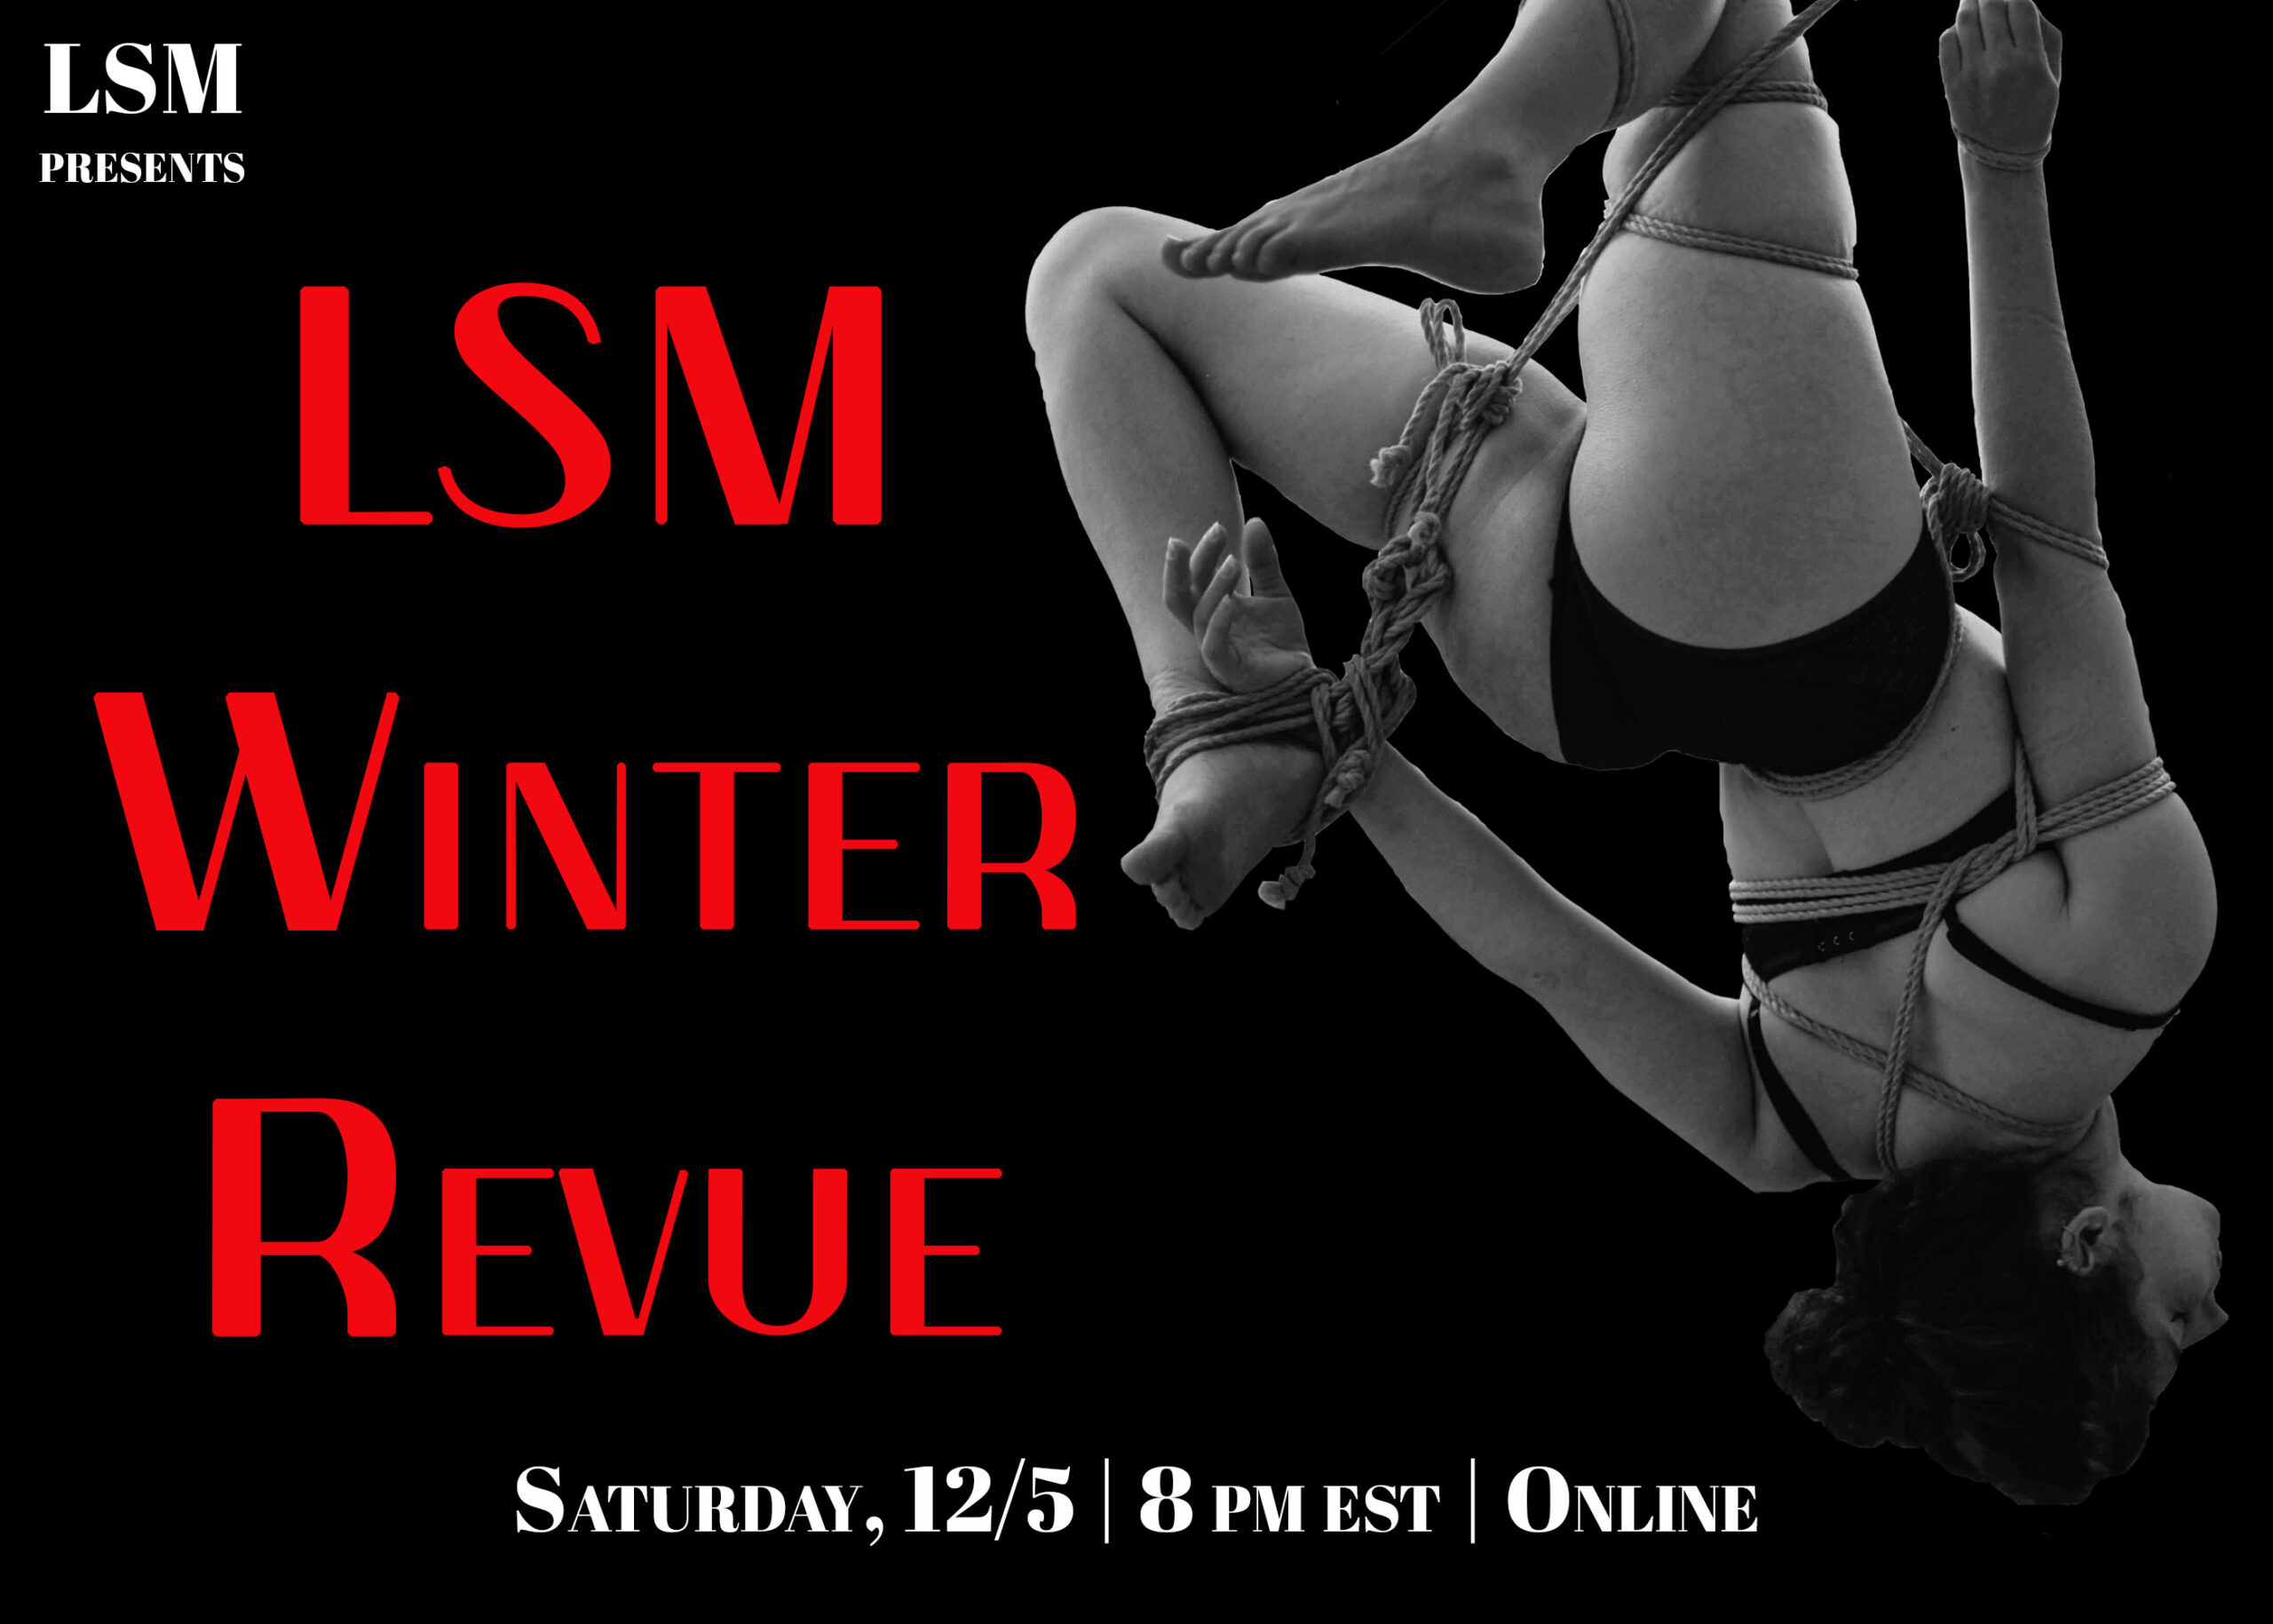 LSM Winter Revue